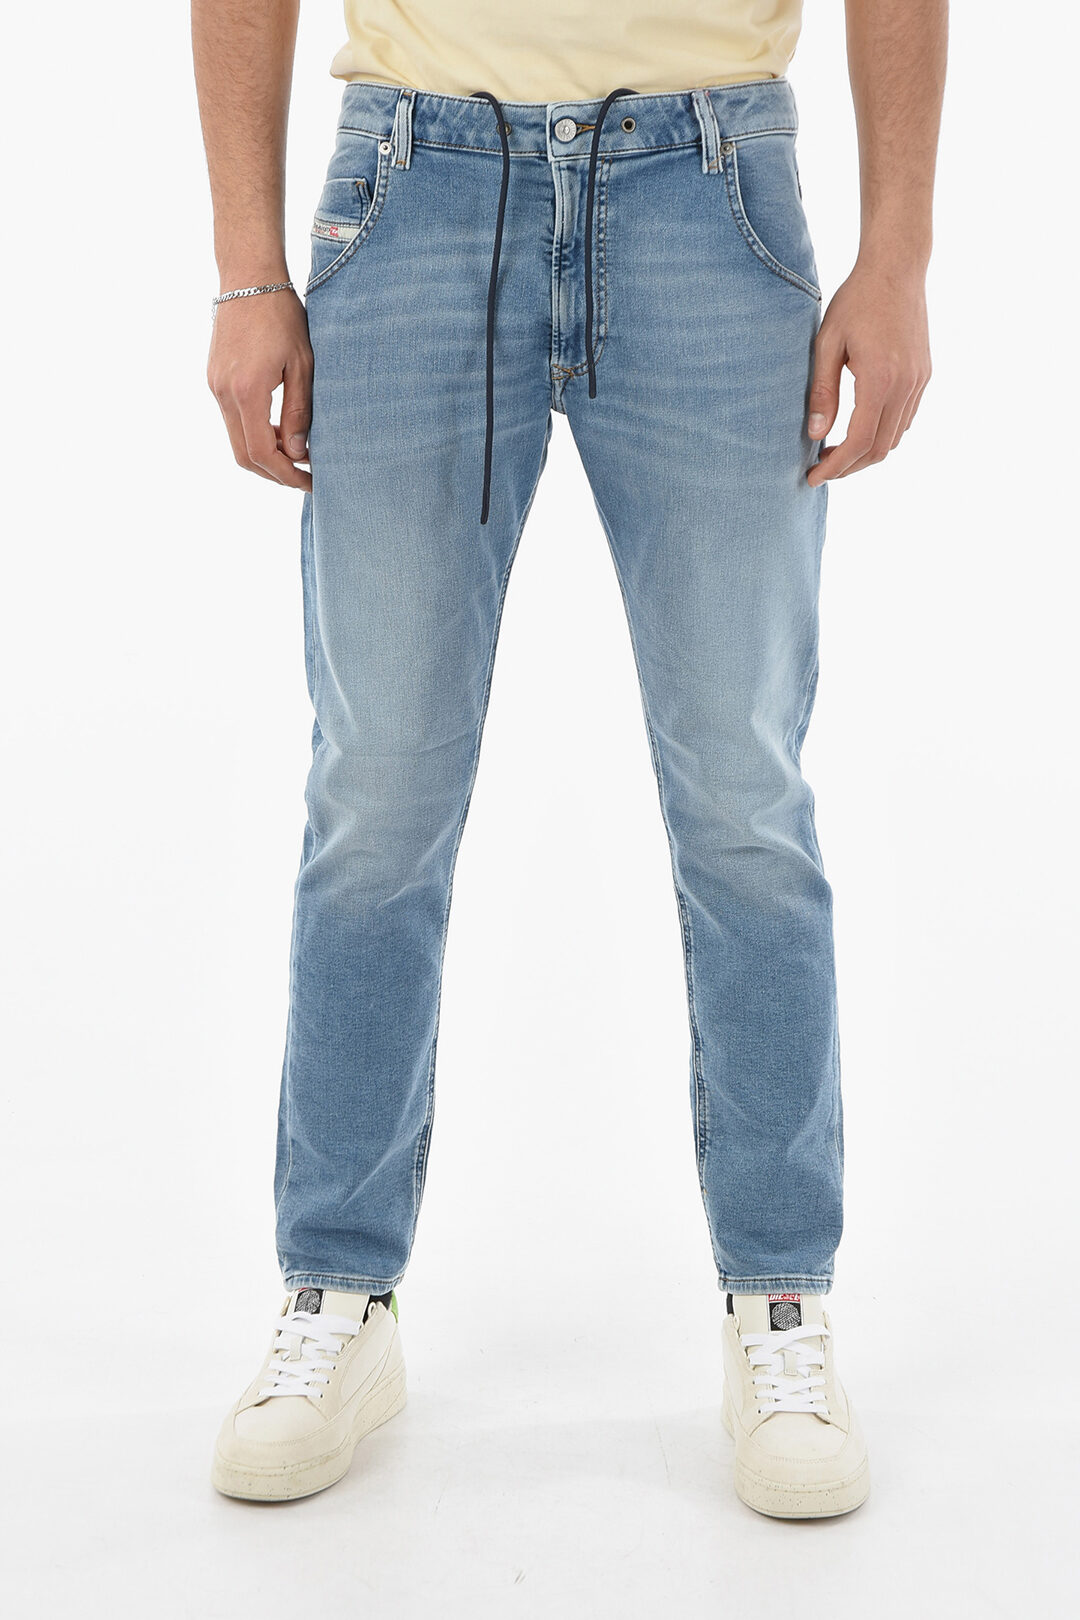 Stretch Denim KROOLEY-Y-T Jogg Jeans 17cm L.32